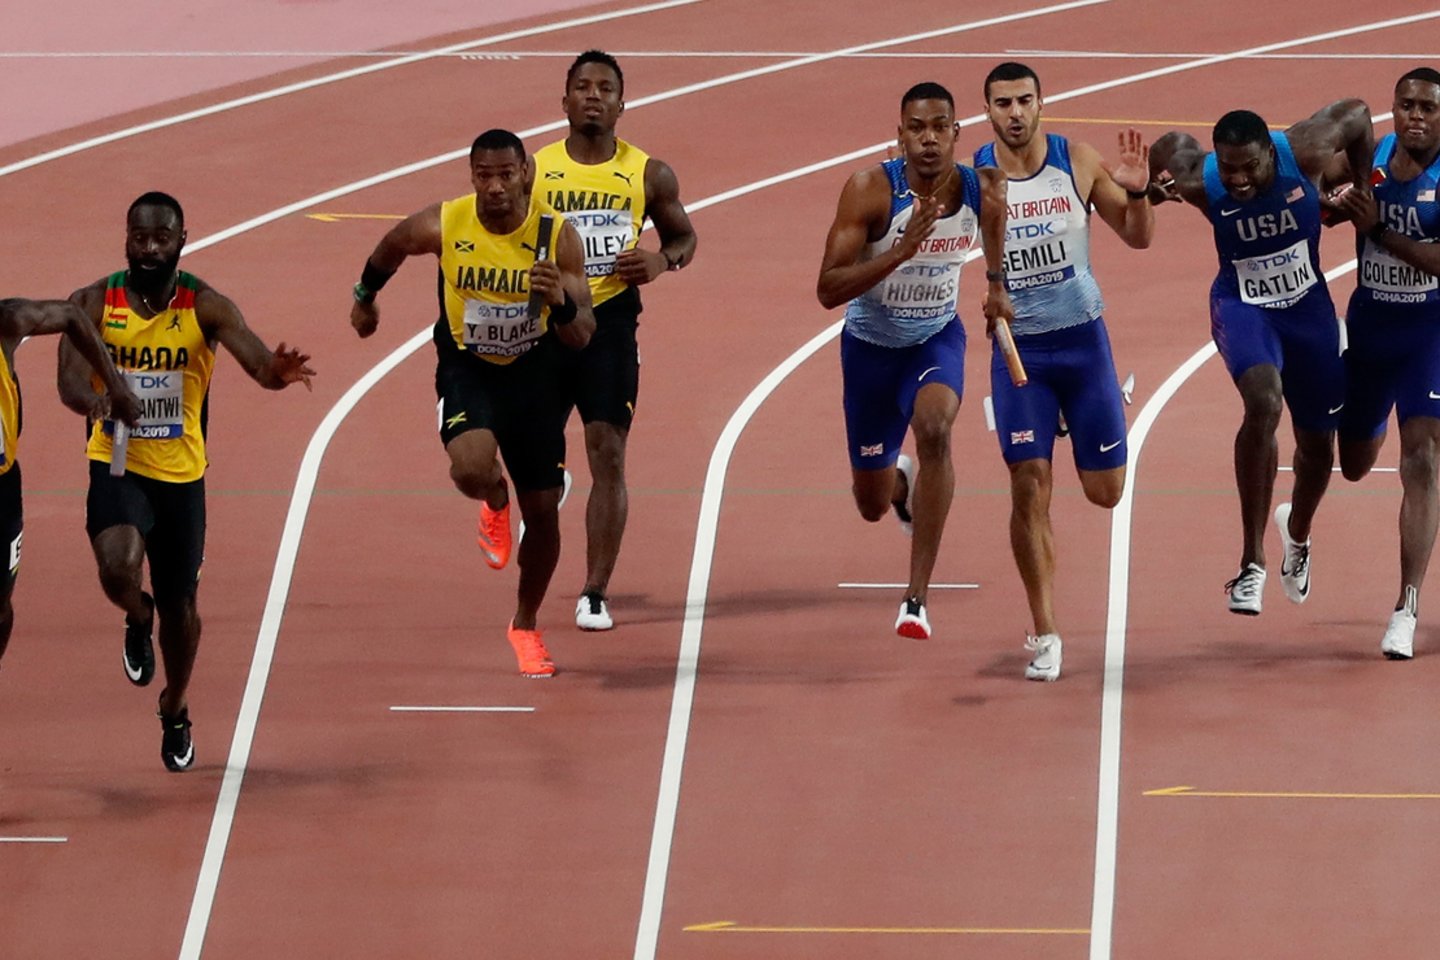  Vyrų 4x100 m bėgimo estafetės finalas.<br> Zuma Press/Scanpix nuotr.